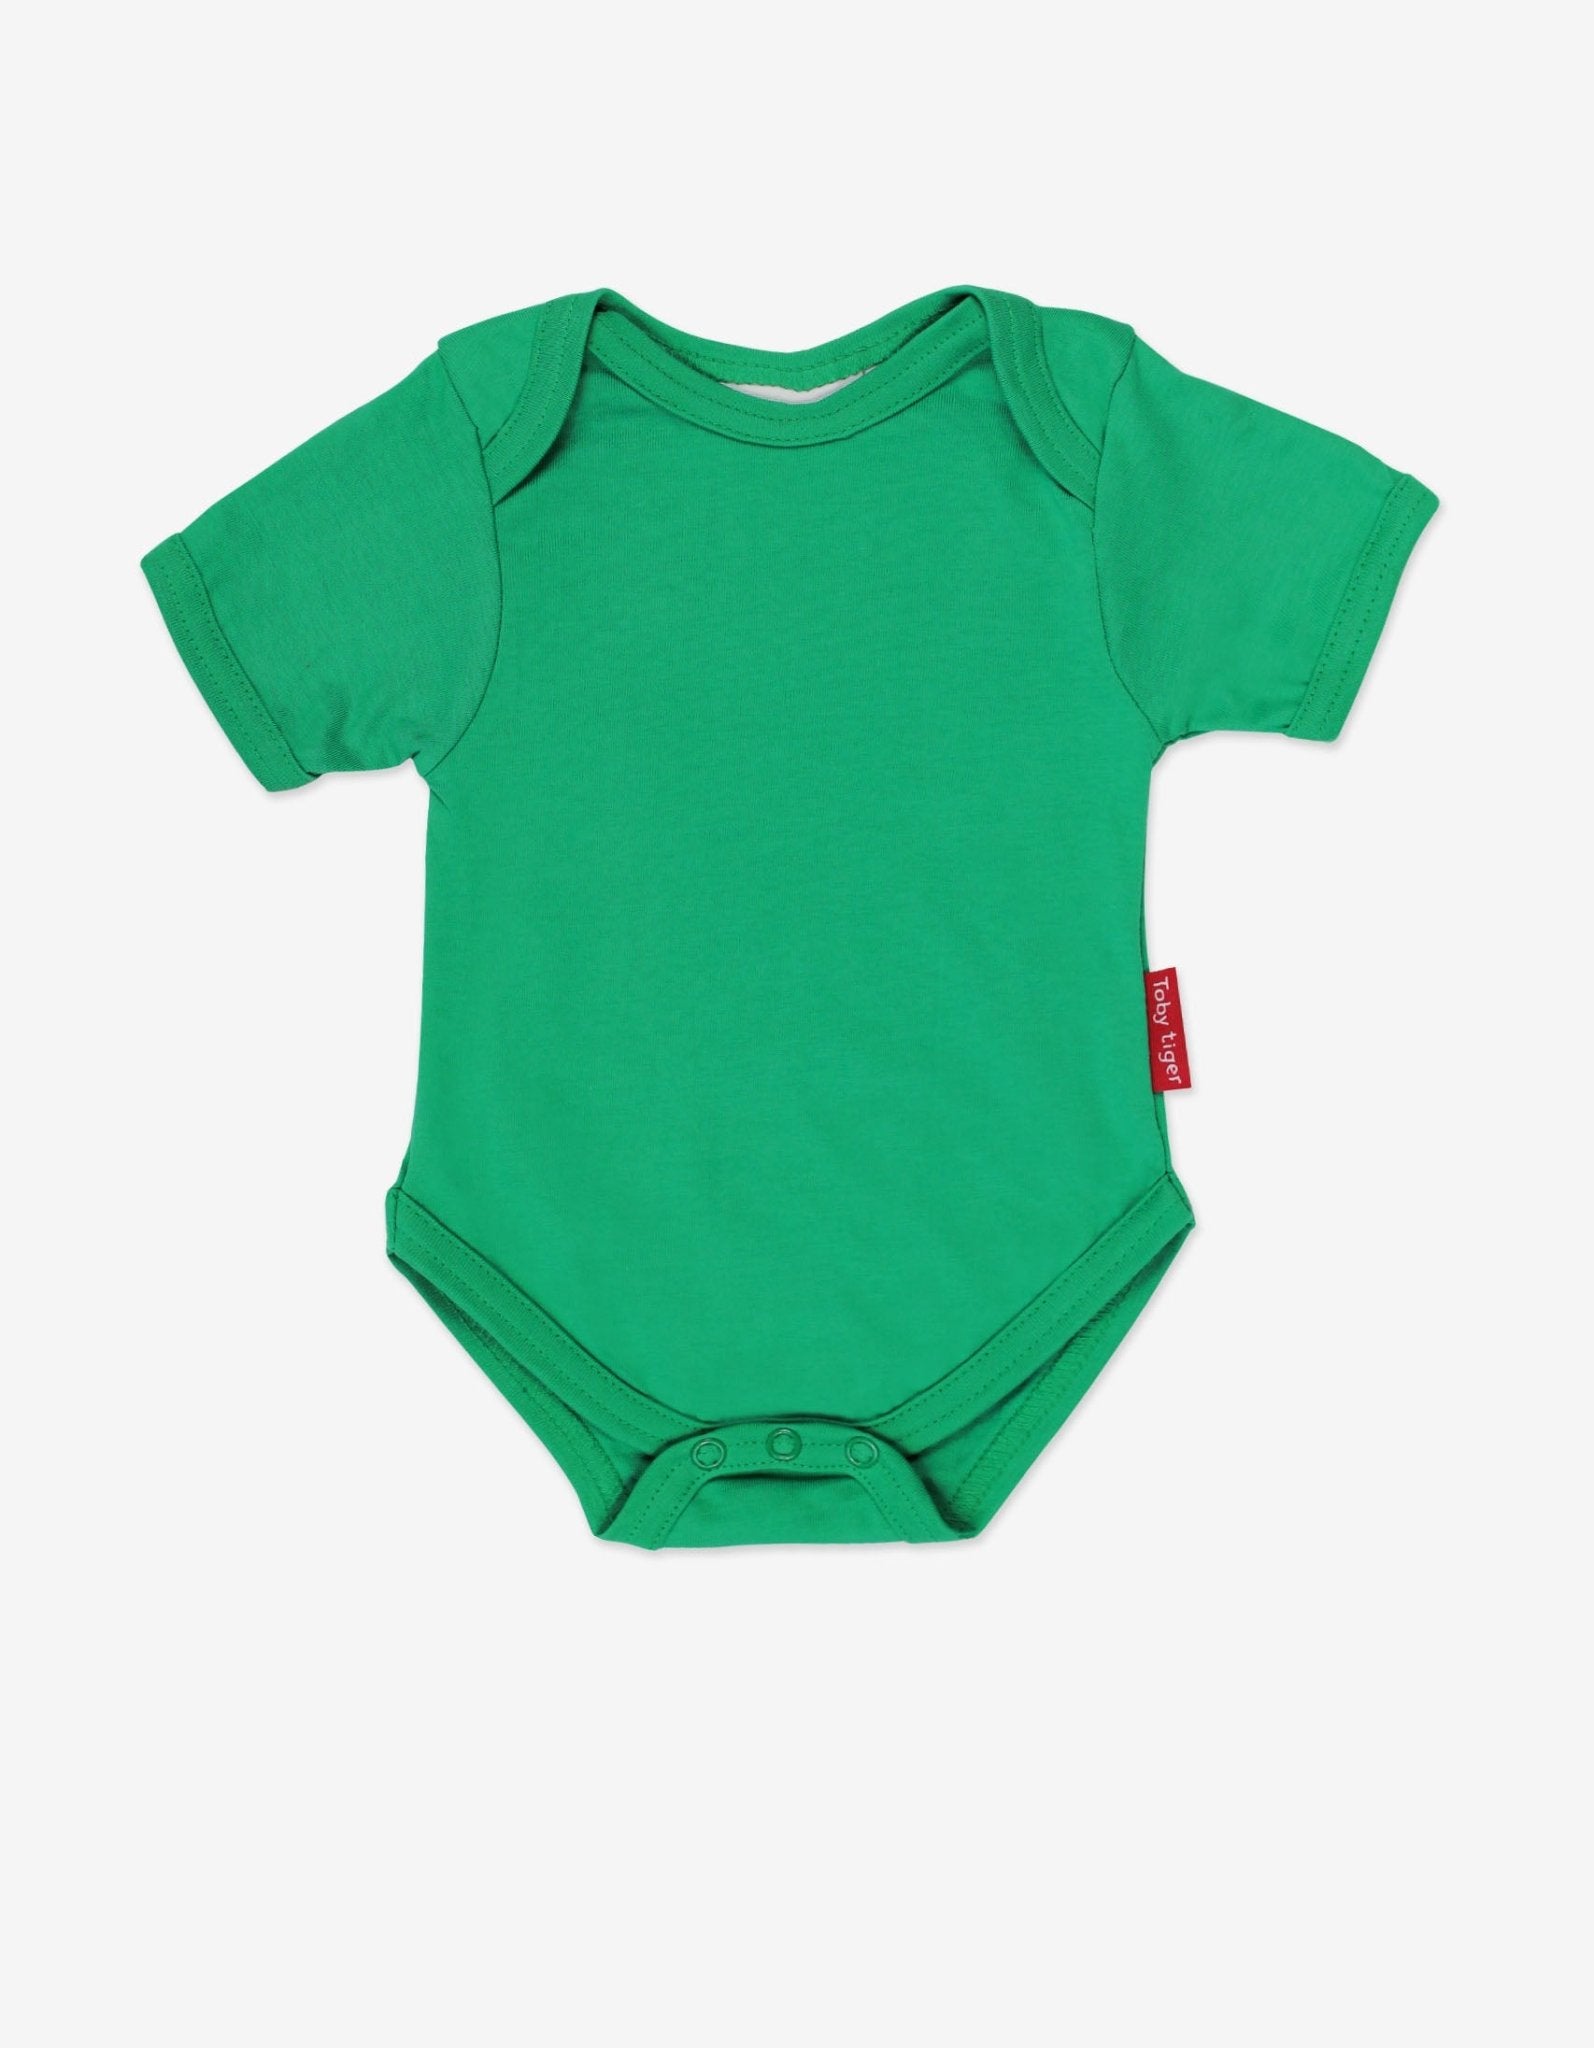 Organic Green Basic Short-Sleeved Baby Body - Toby Tiger